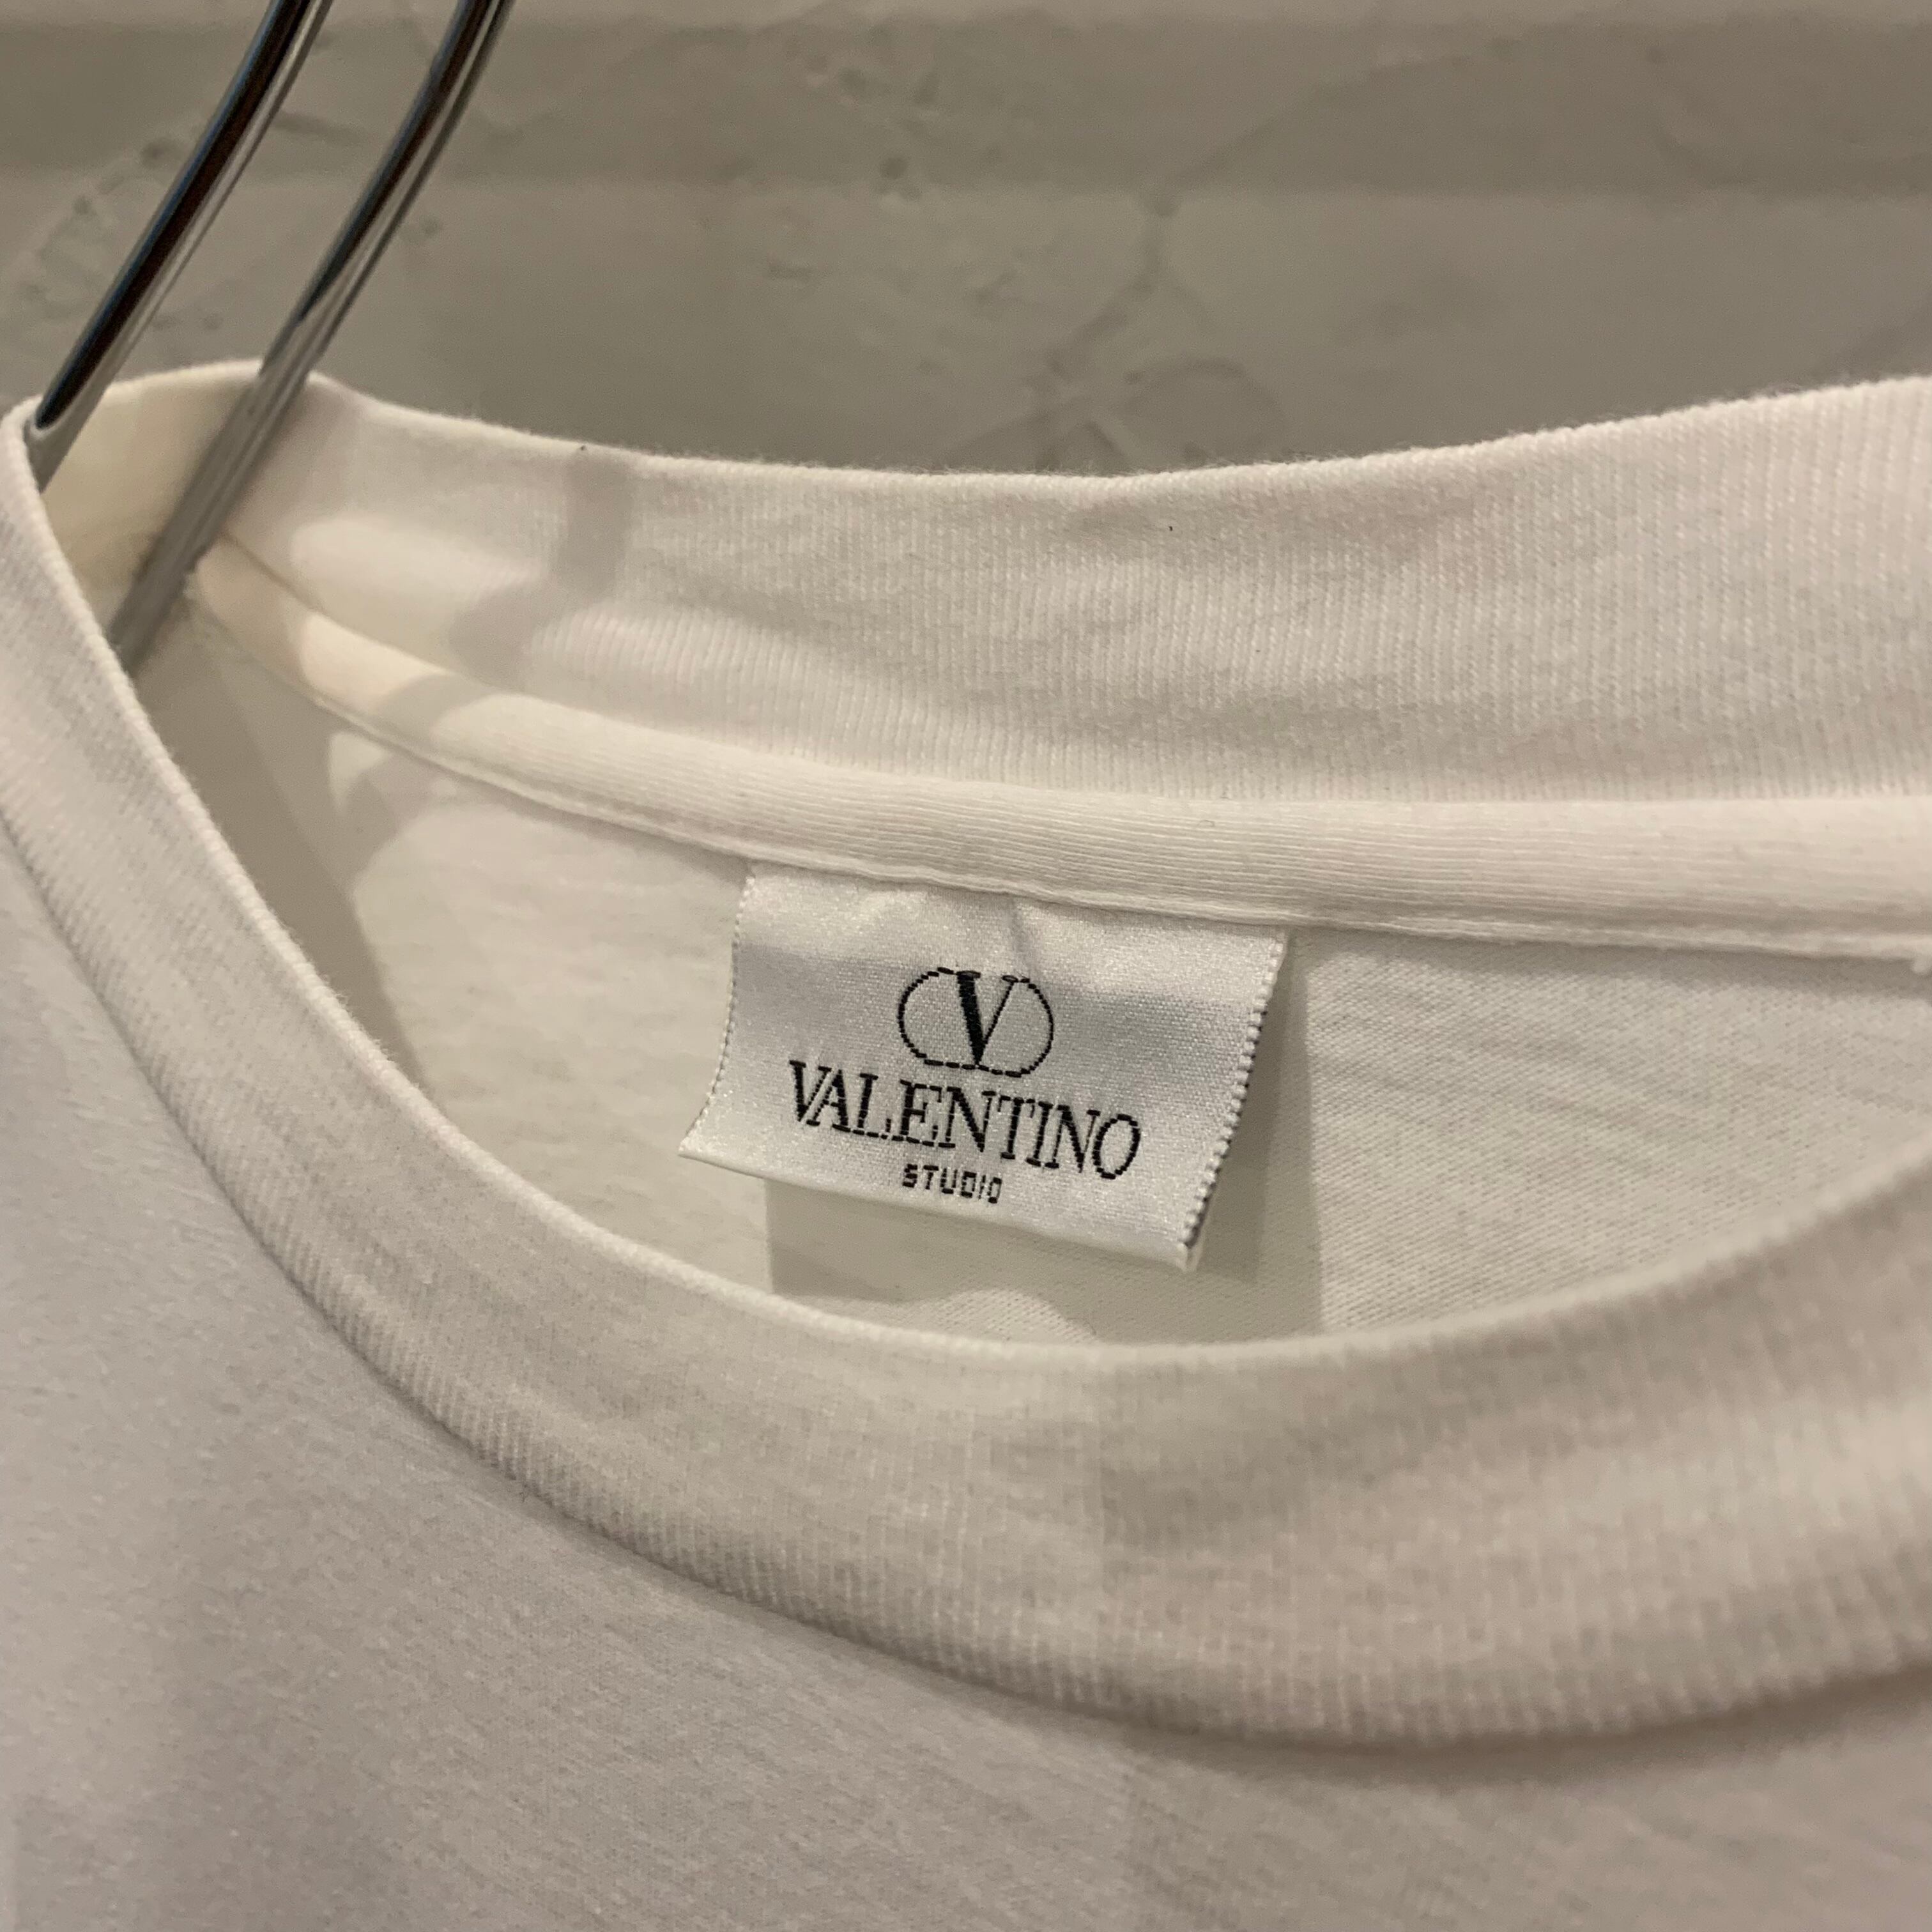 VALENTINO STUDIO / logo embroidery T-shirt / 90's | ROOM